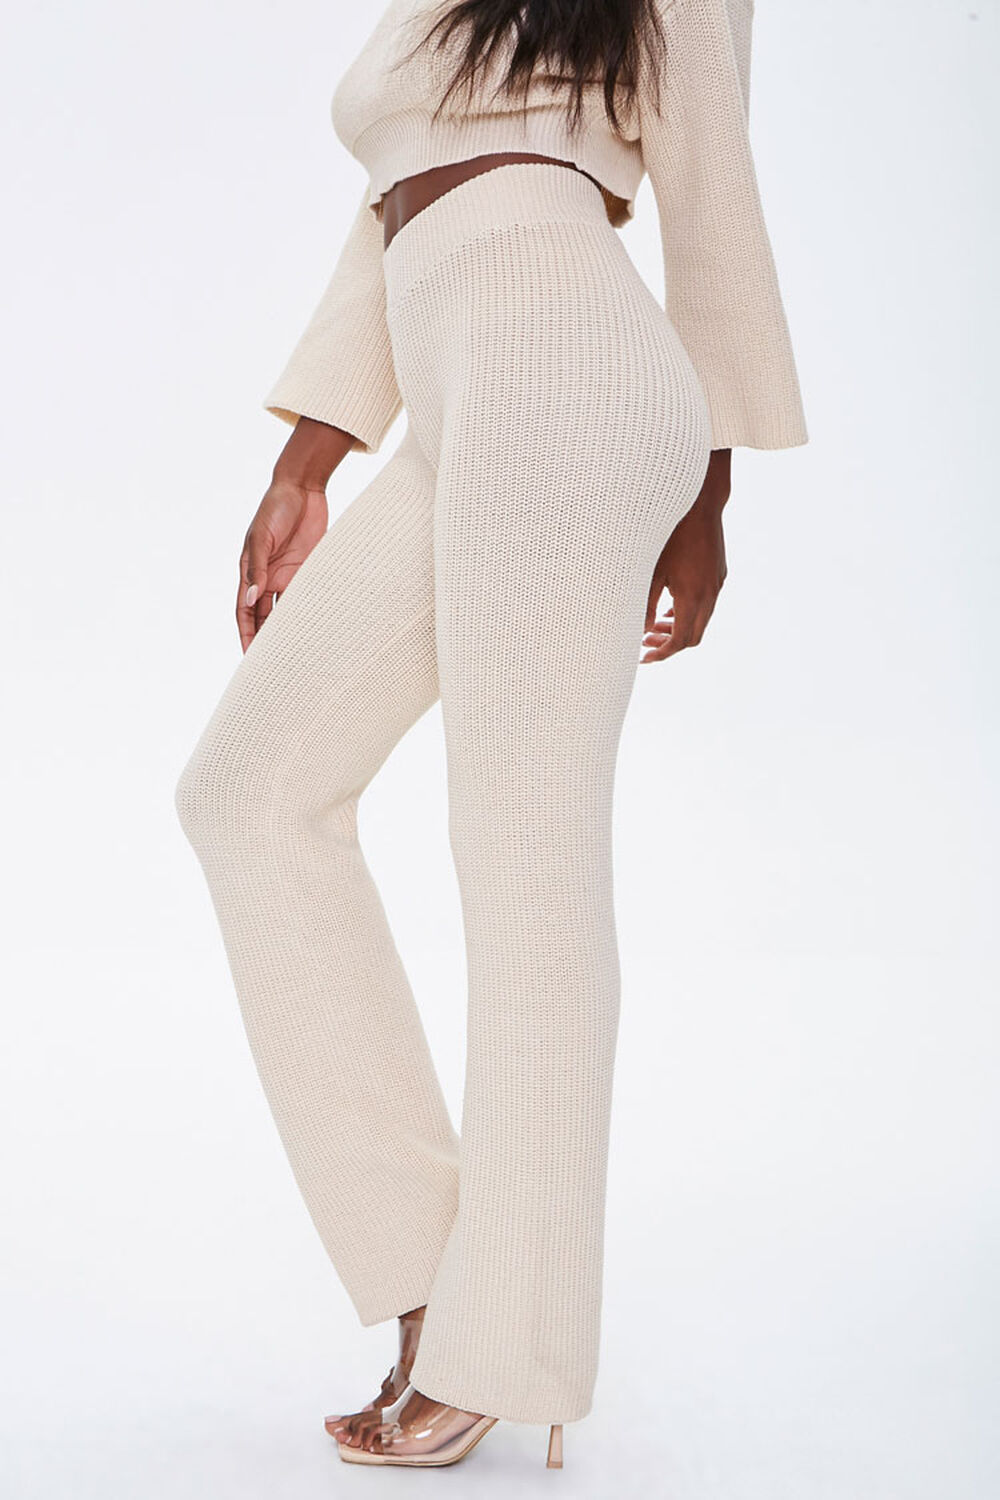 SAND   Sweater-Knit Pants, image 2